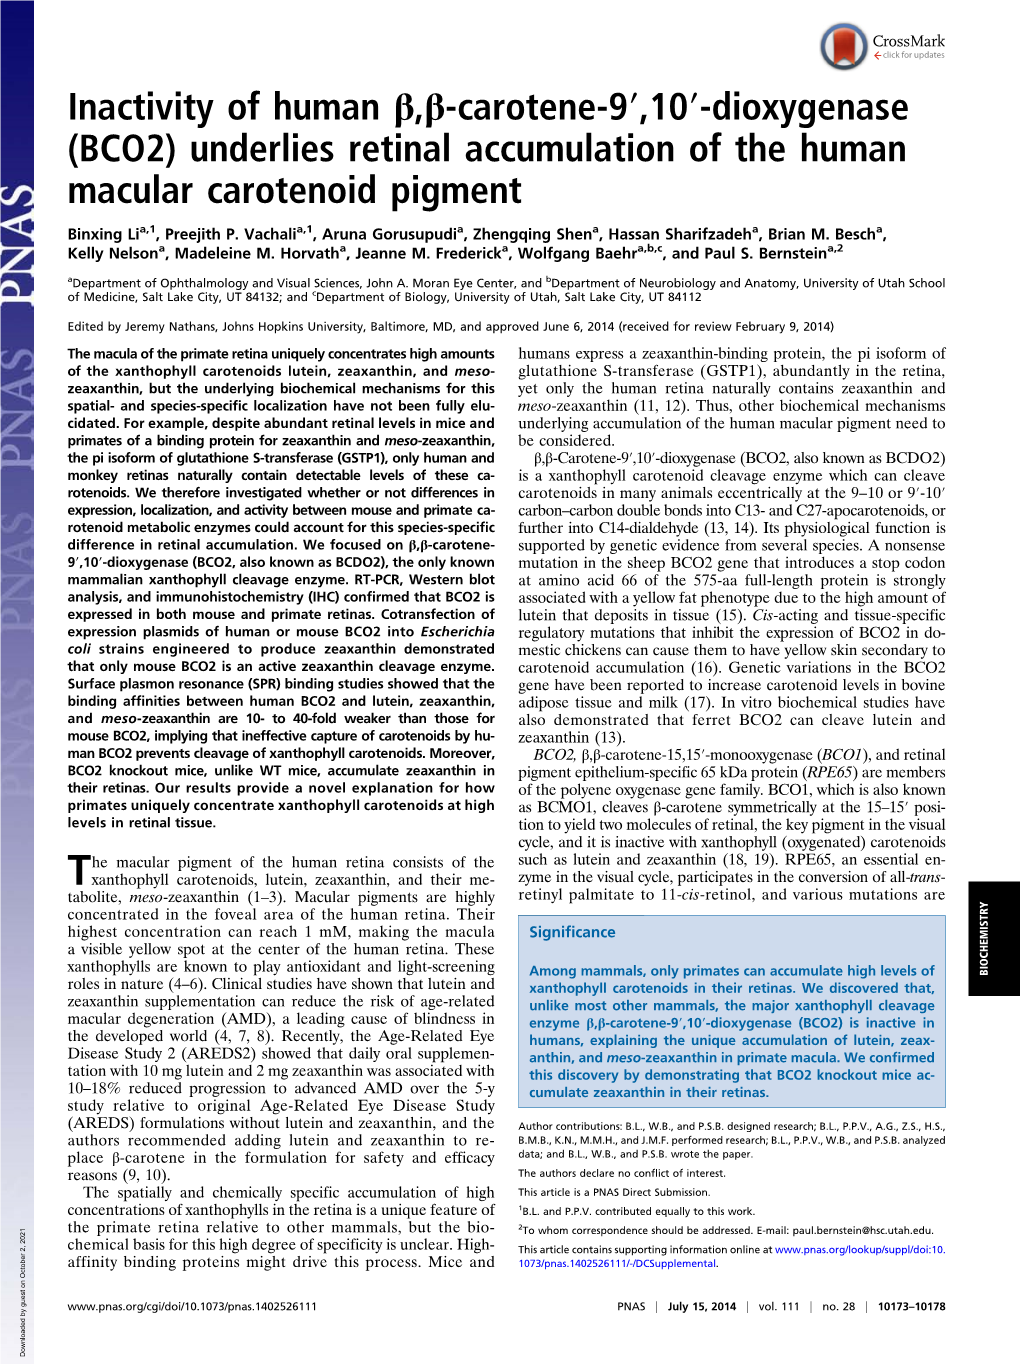 Inactivity of Human Β,Β-Carotene-9′,10′-Dioxygenase (BCO2) Underlies Retinal Accumulation of the Human Macular Carotenoid Pigment